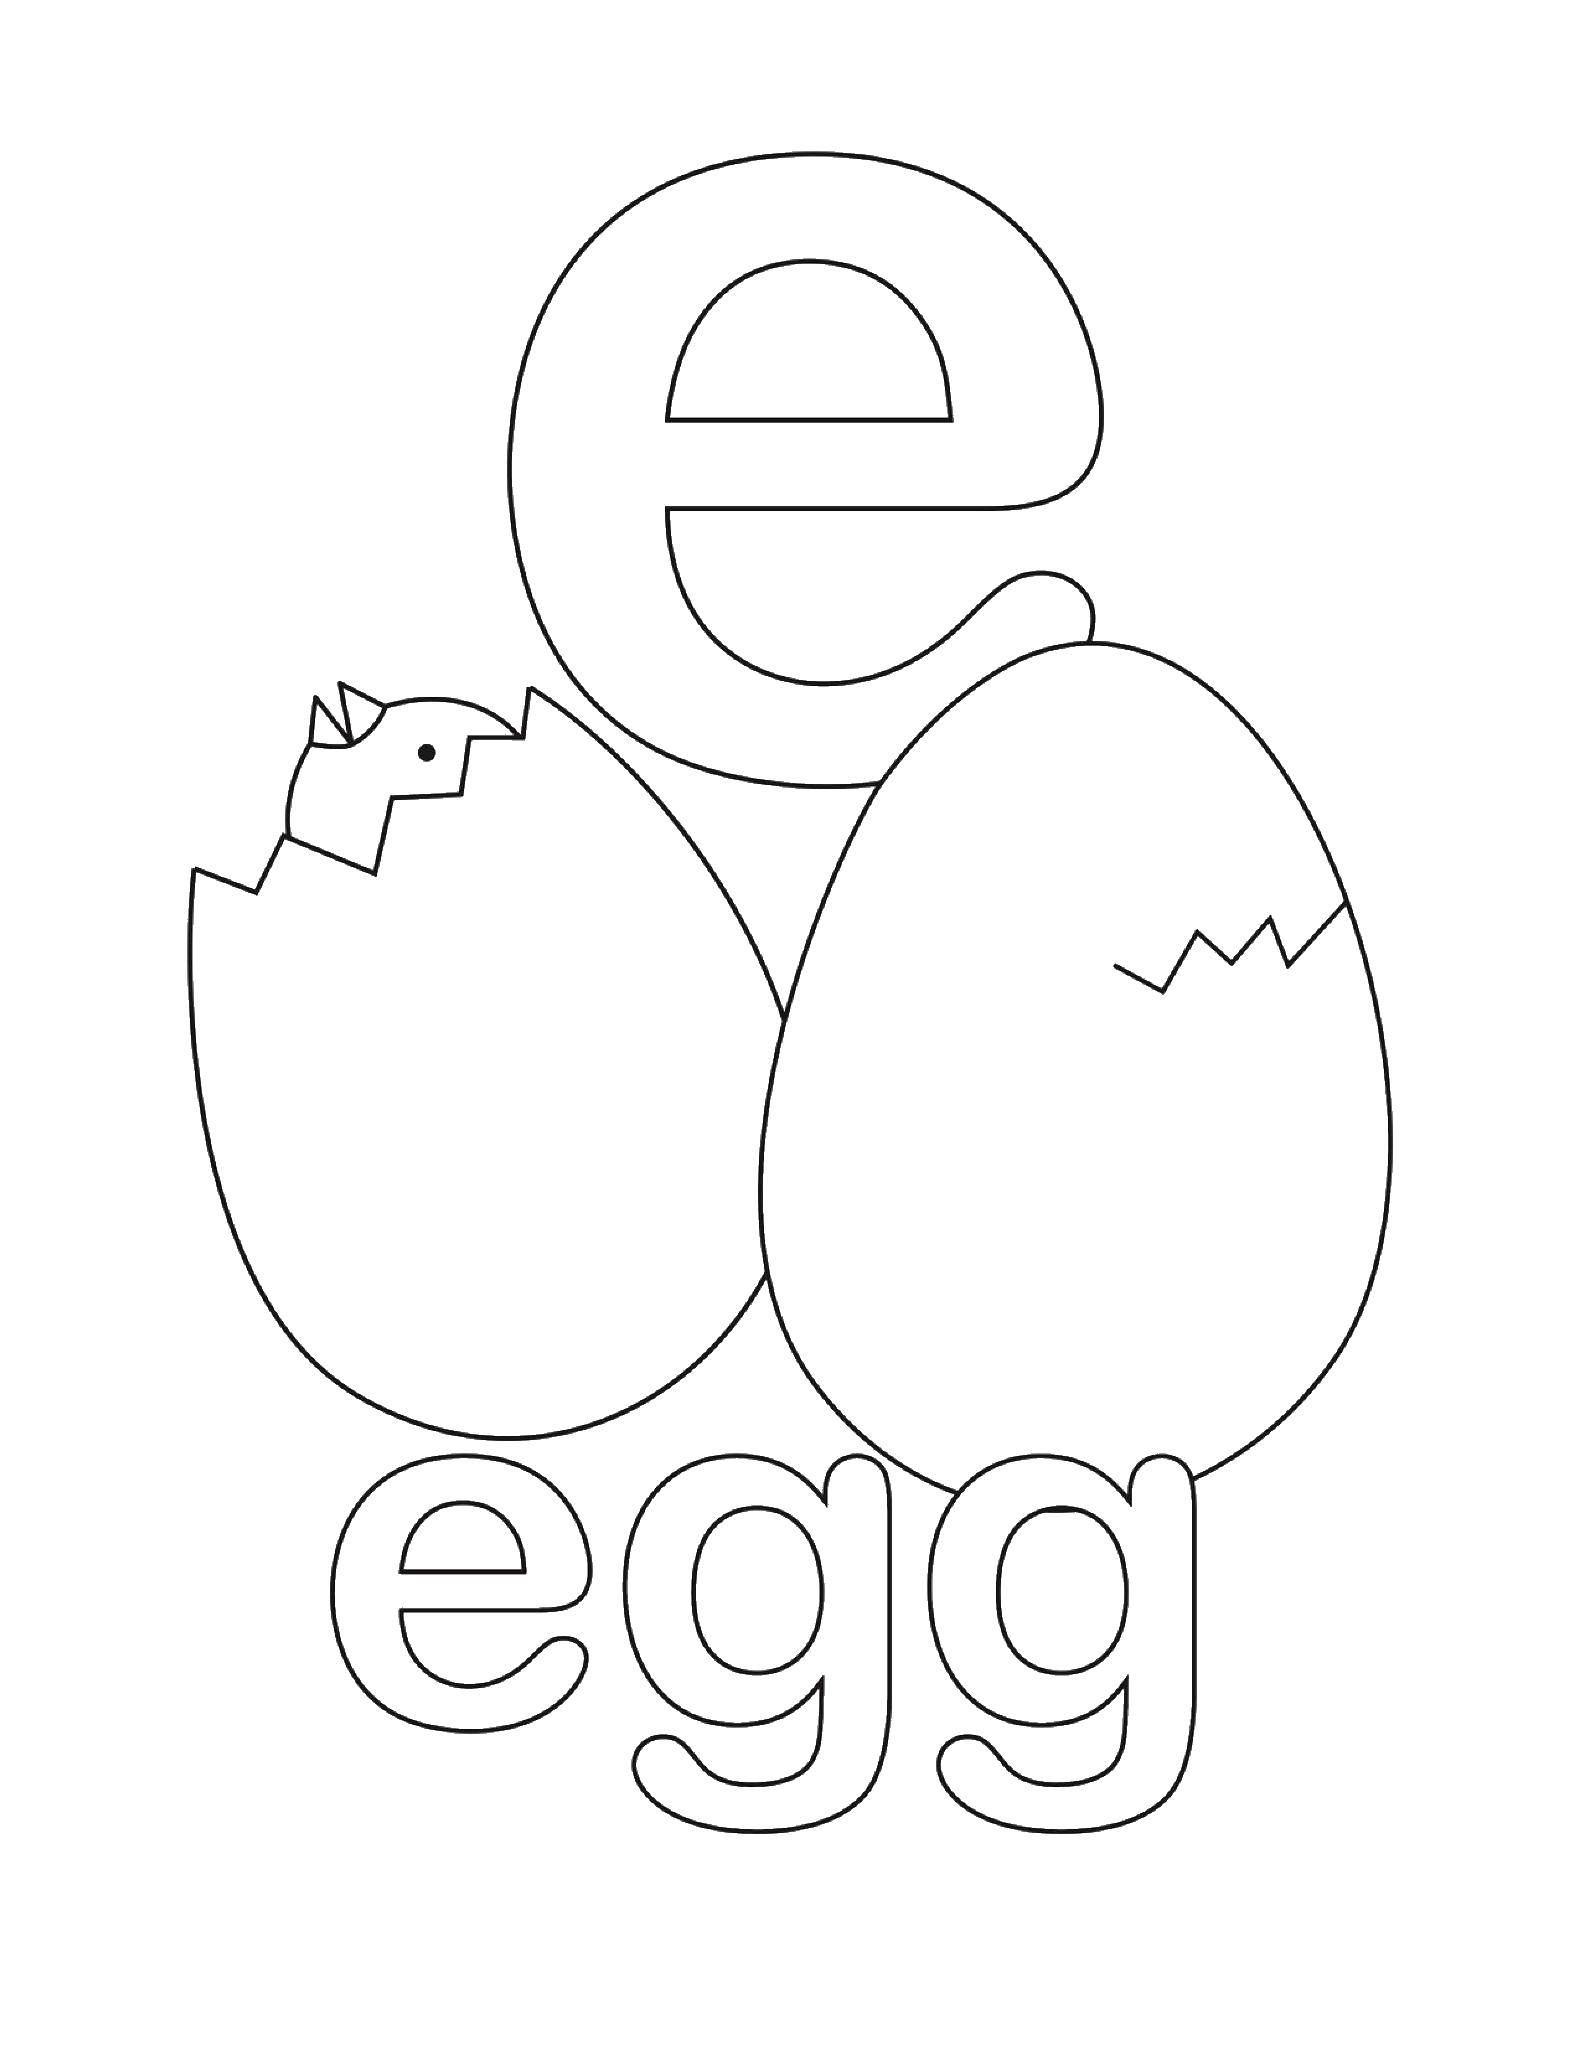 Название: Раскраска Яйцо. Категория: английские слова. Теги: английские слова, яйцо.